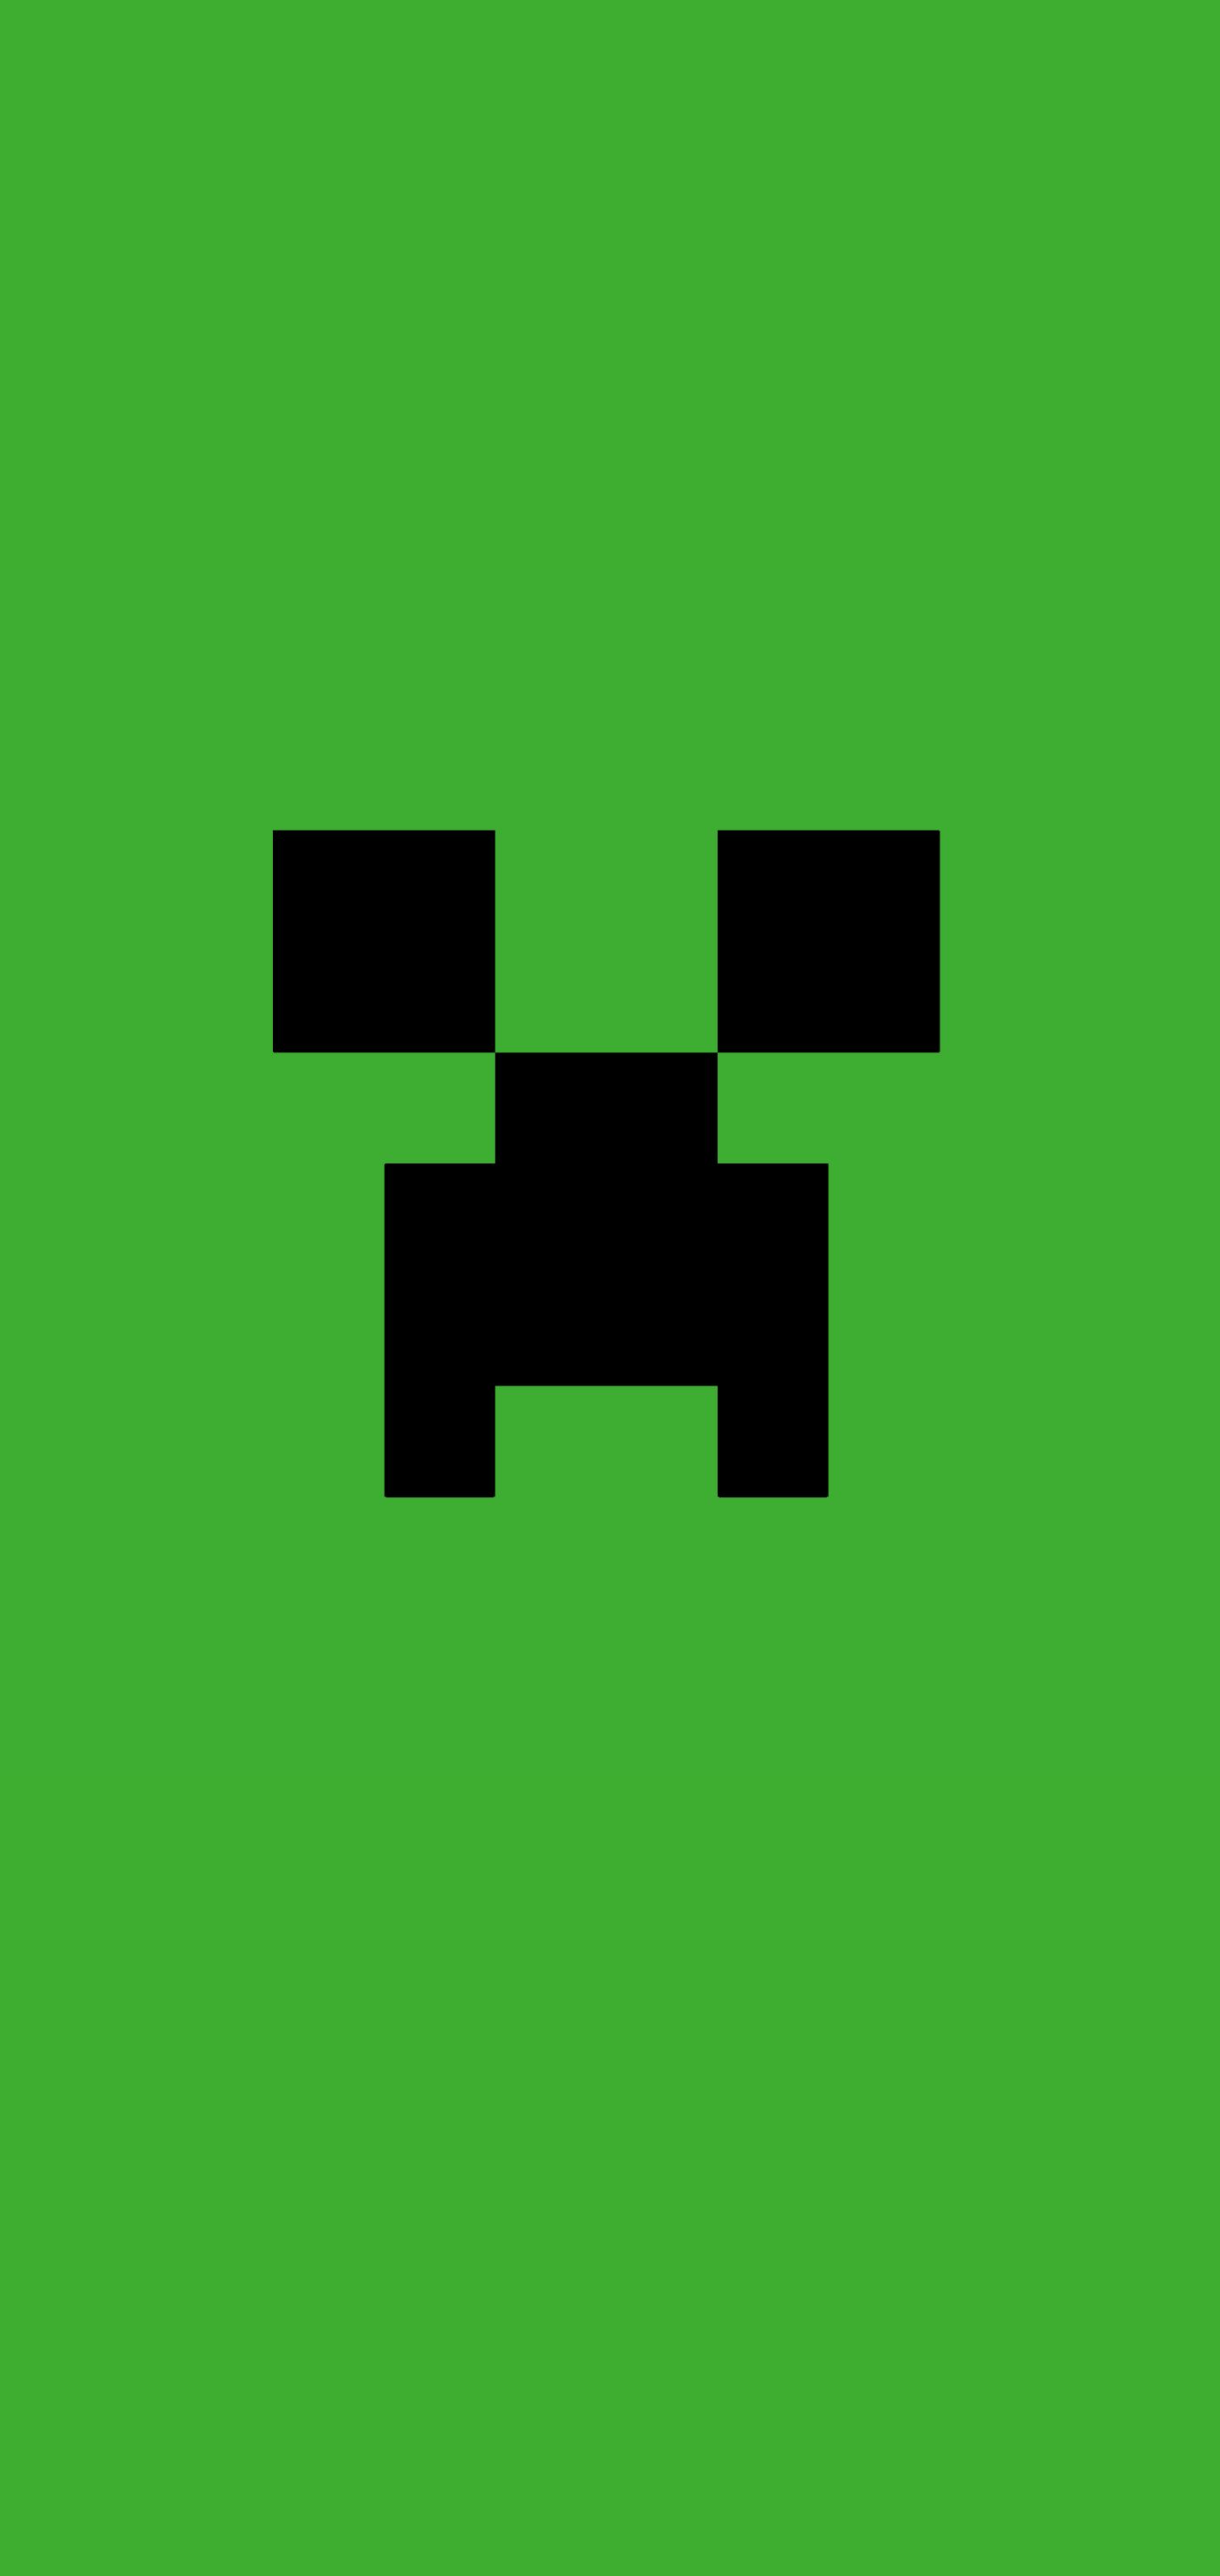 creeper (minecraft), video game, minecraft, green